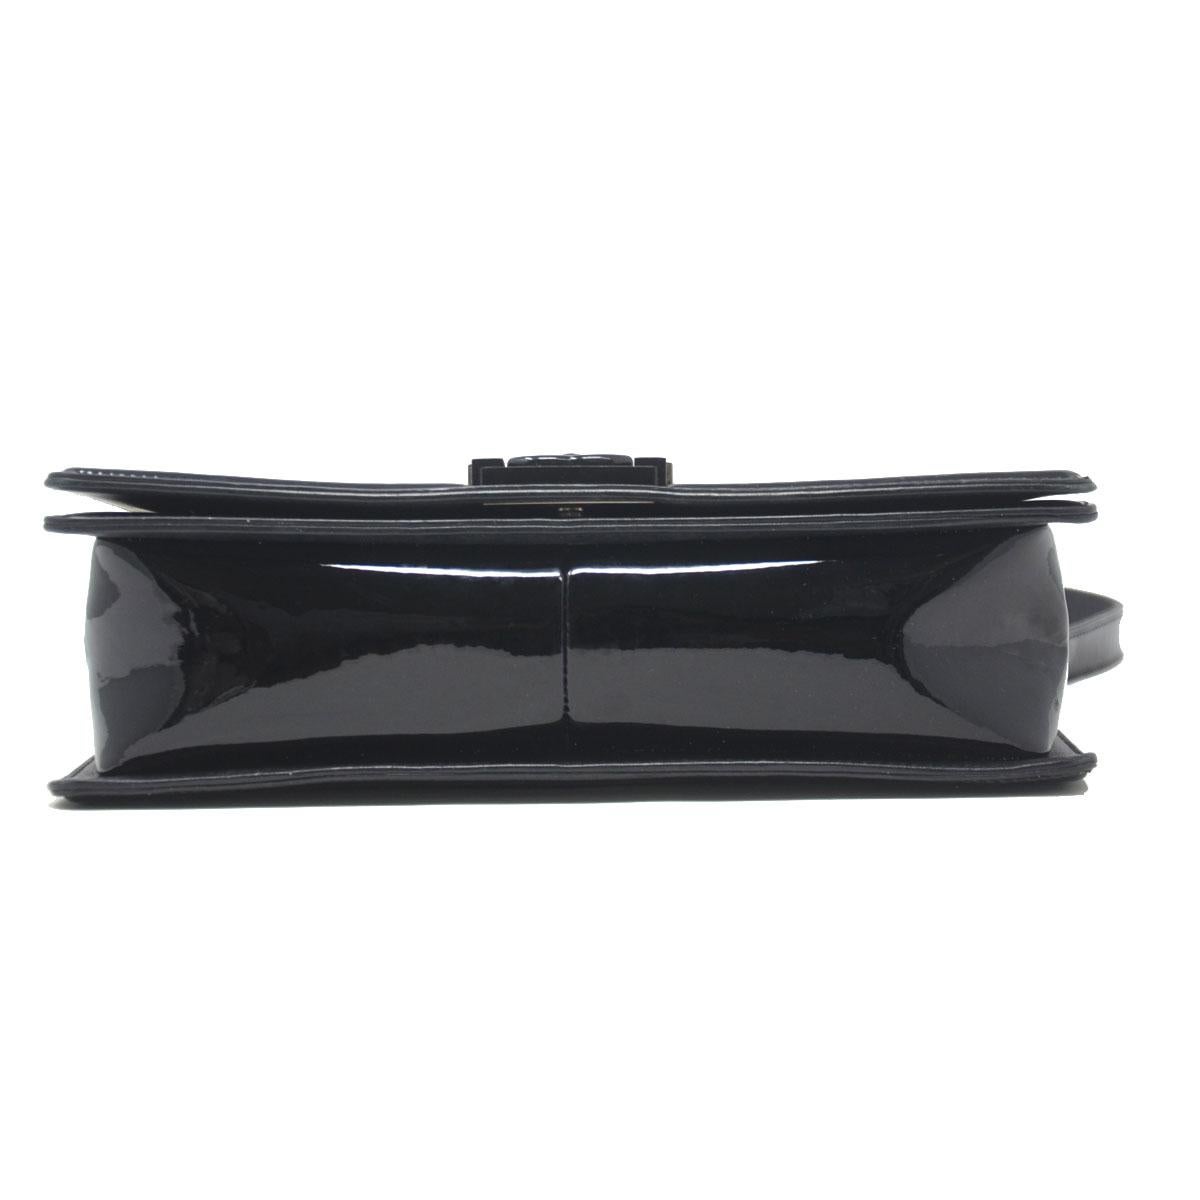 Chanel Le Boy Bag SHW Black Jumbo Patent Leather 1